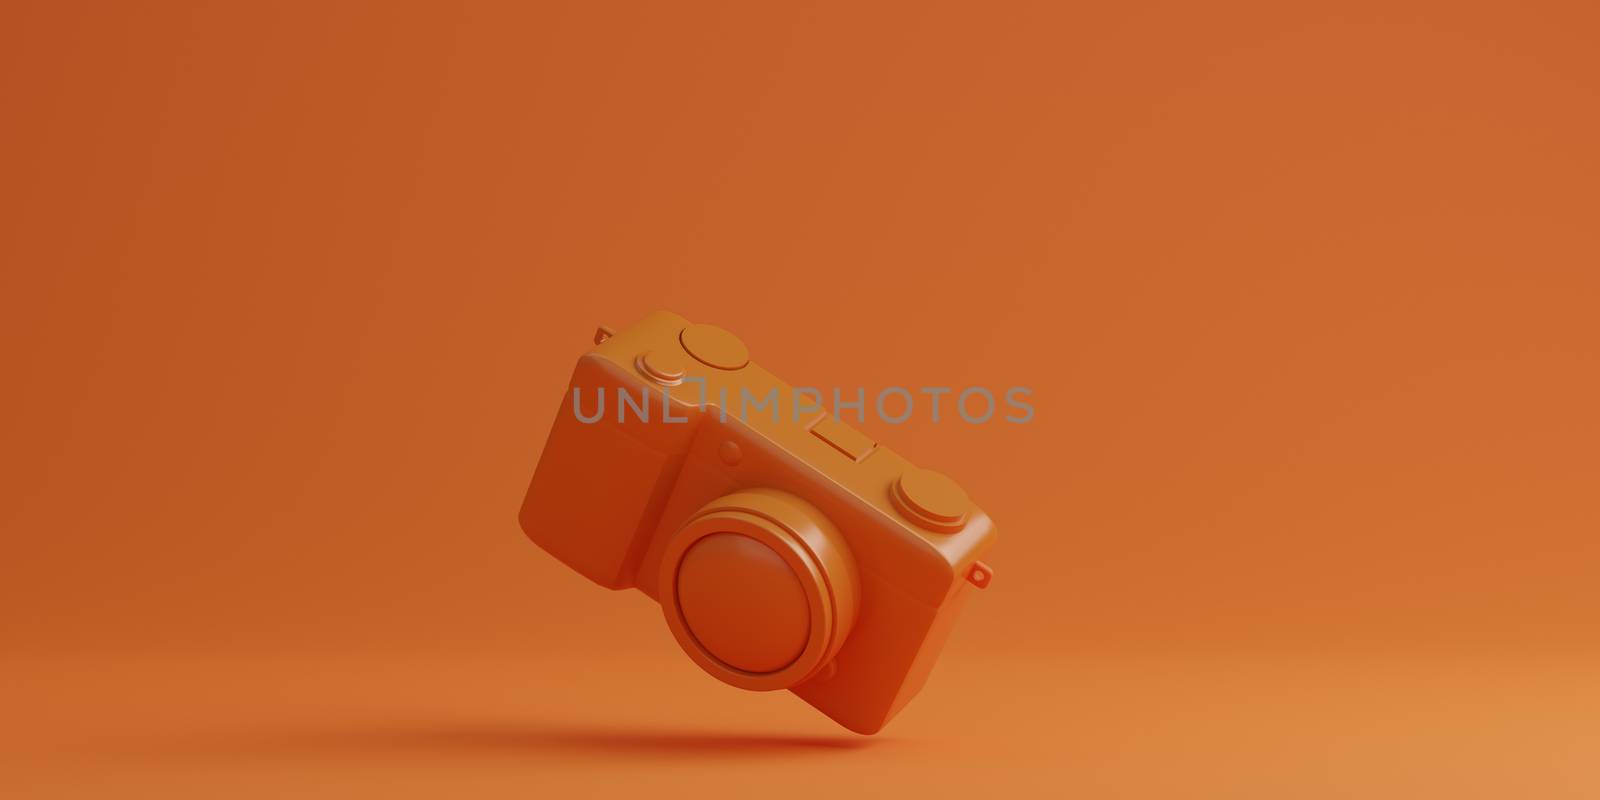 Orange digital camera on orange background, technology concept. by sirawit99